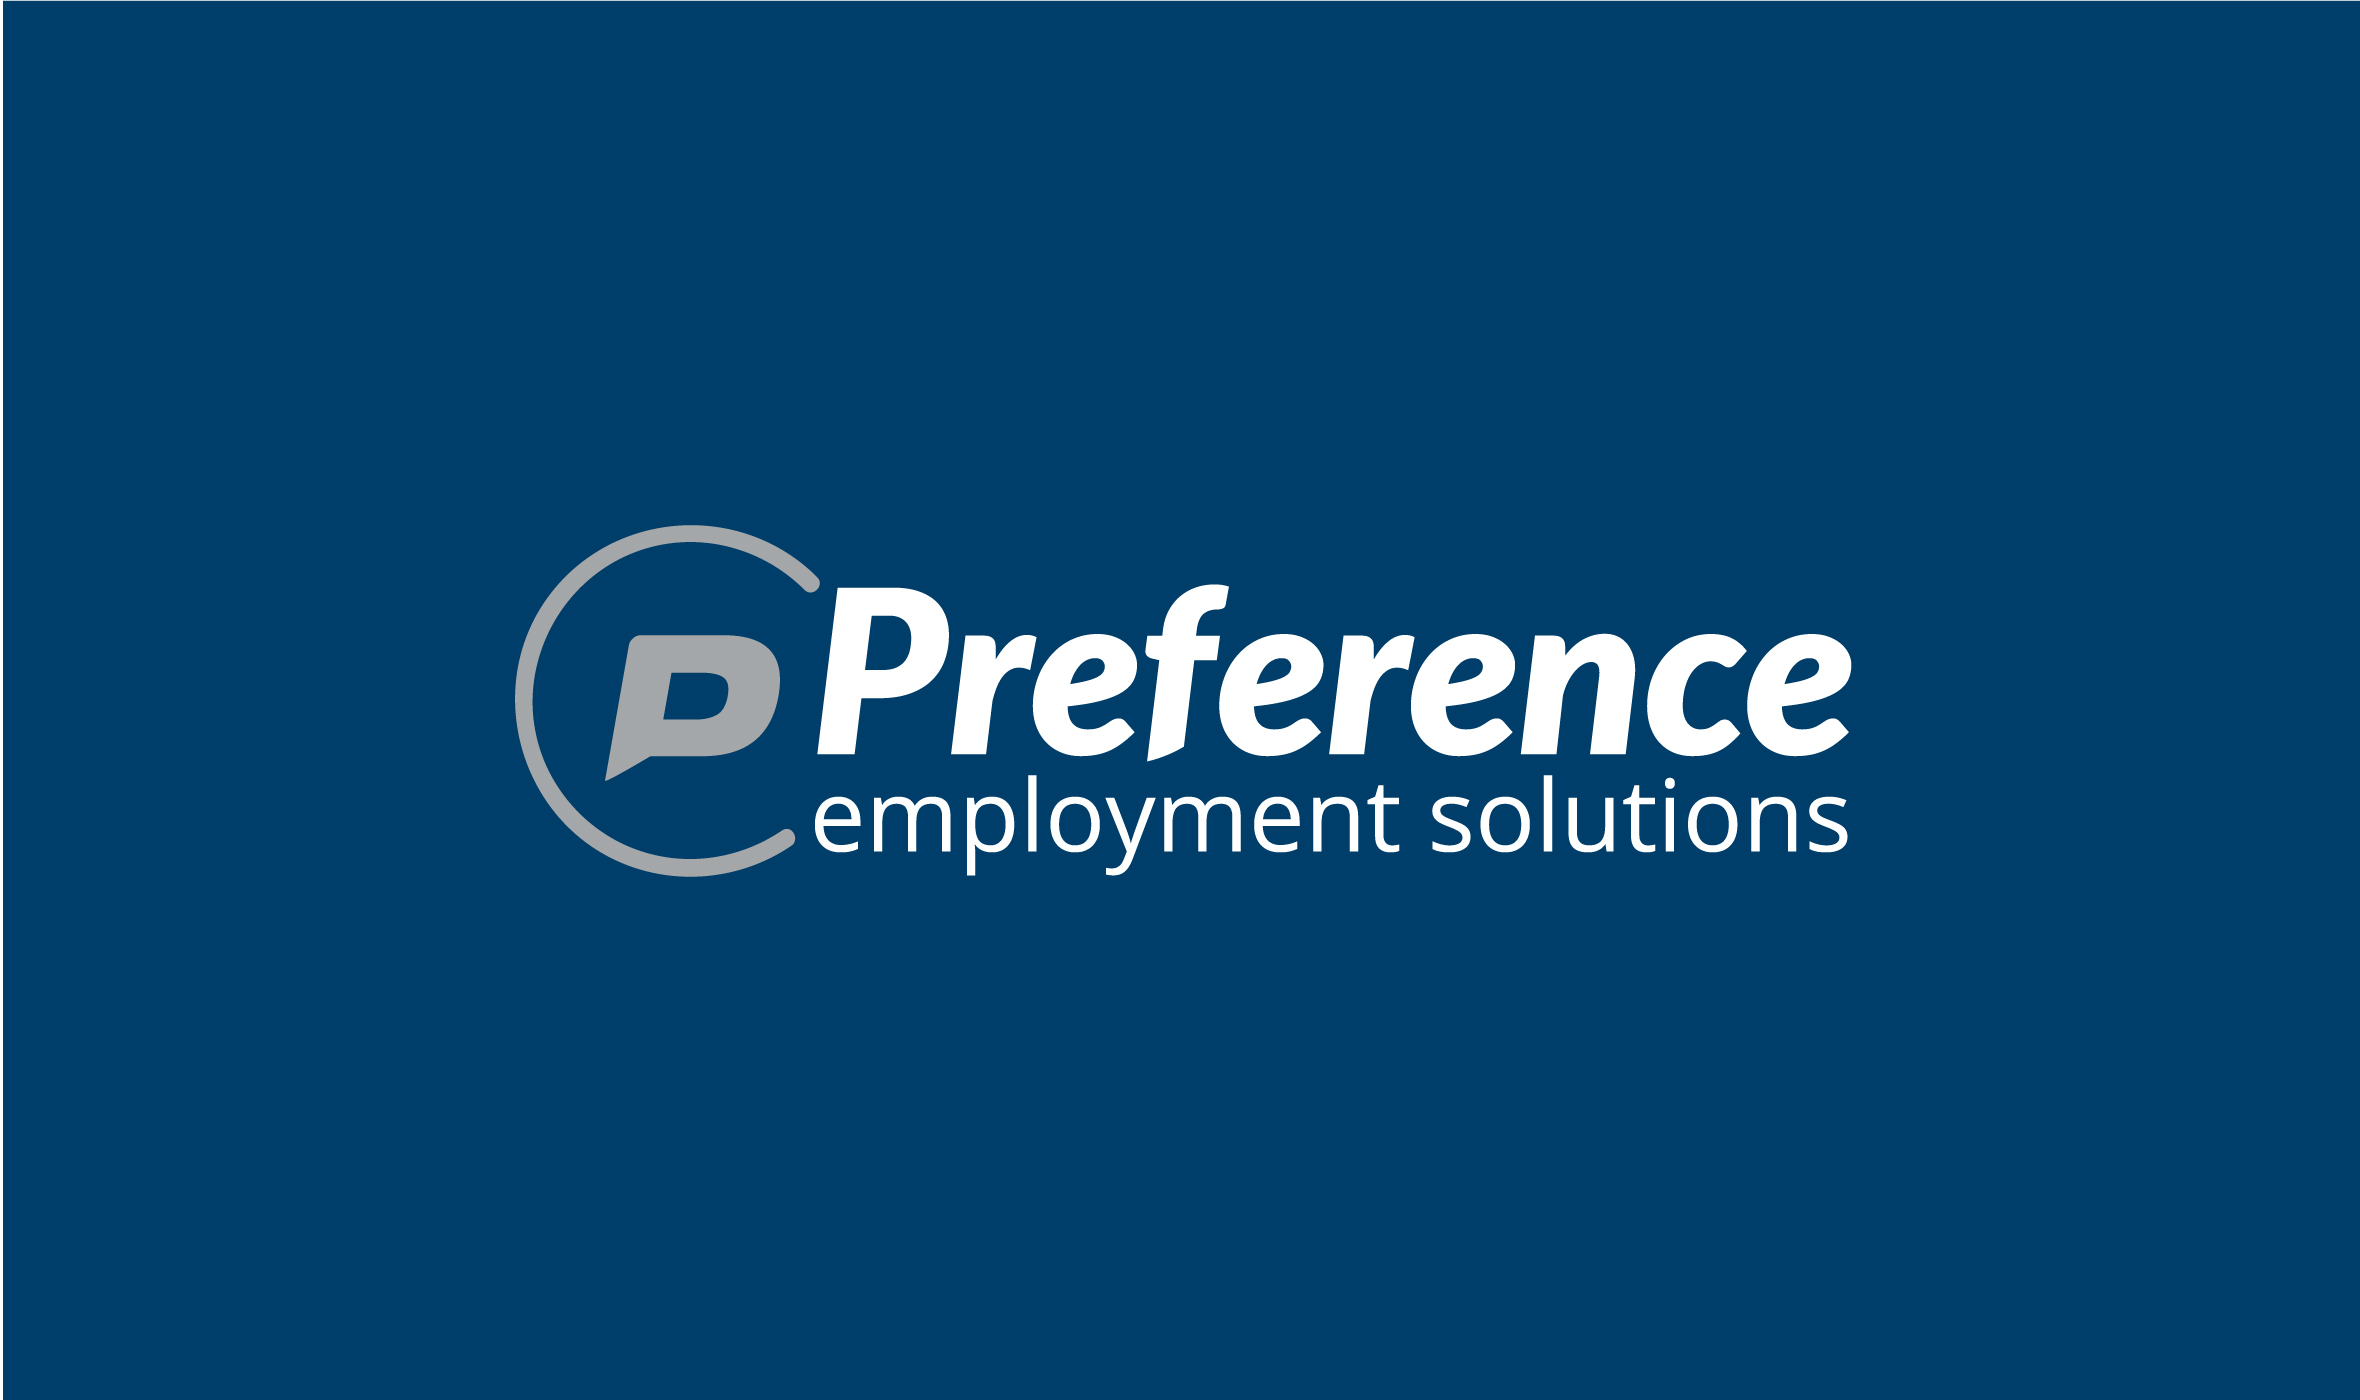 preferenceempoymentsolutions_logo